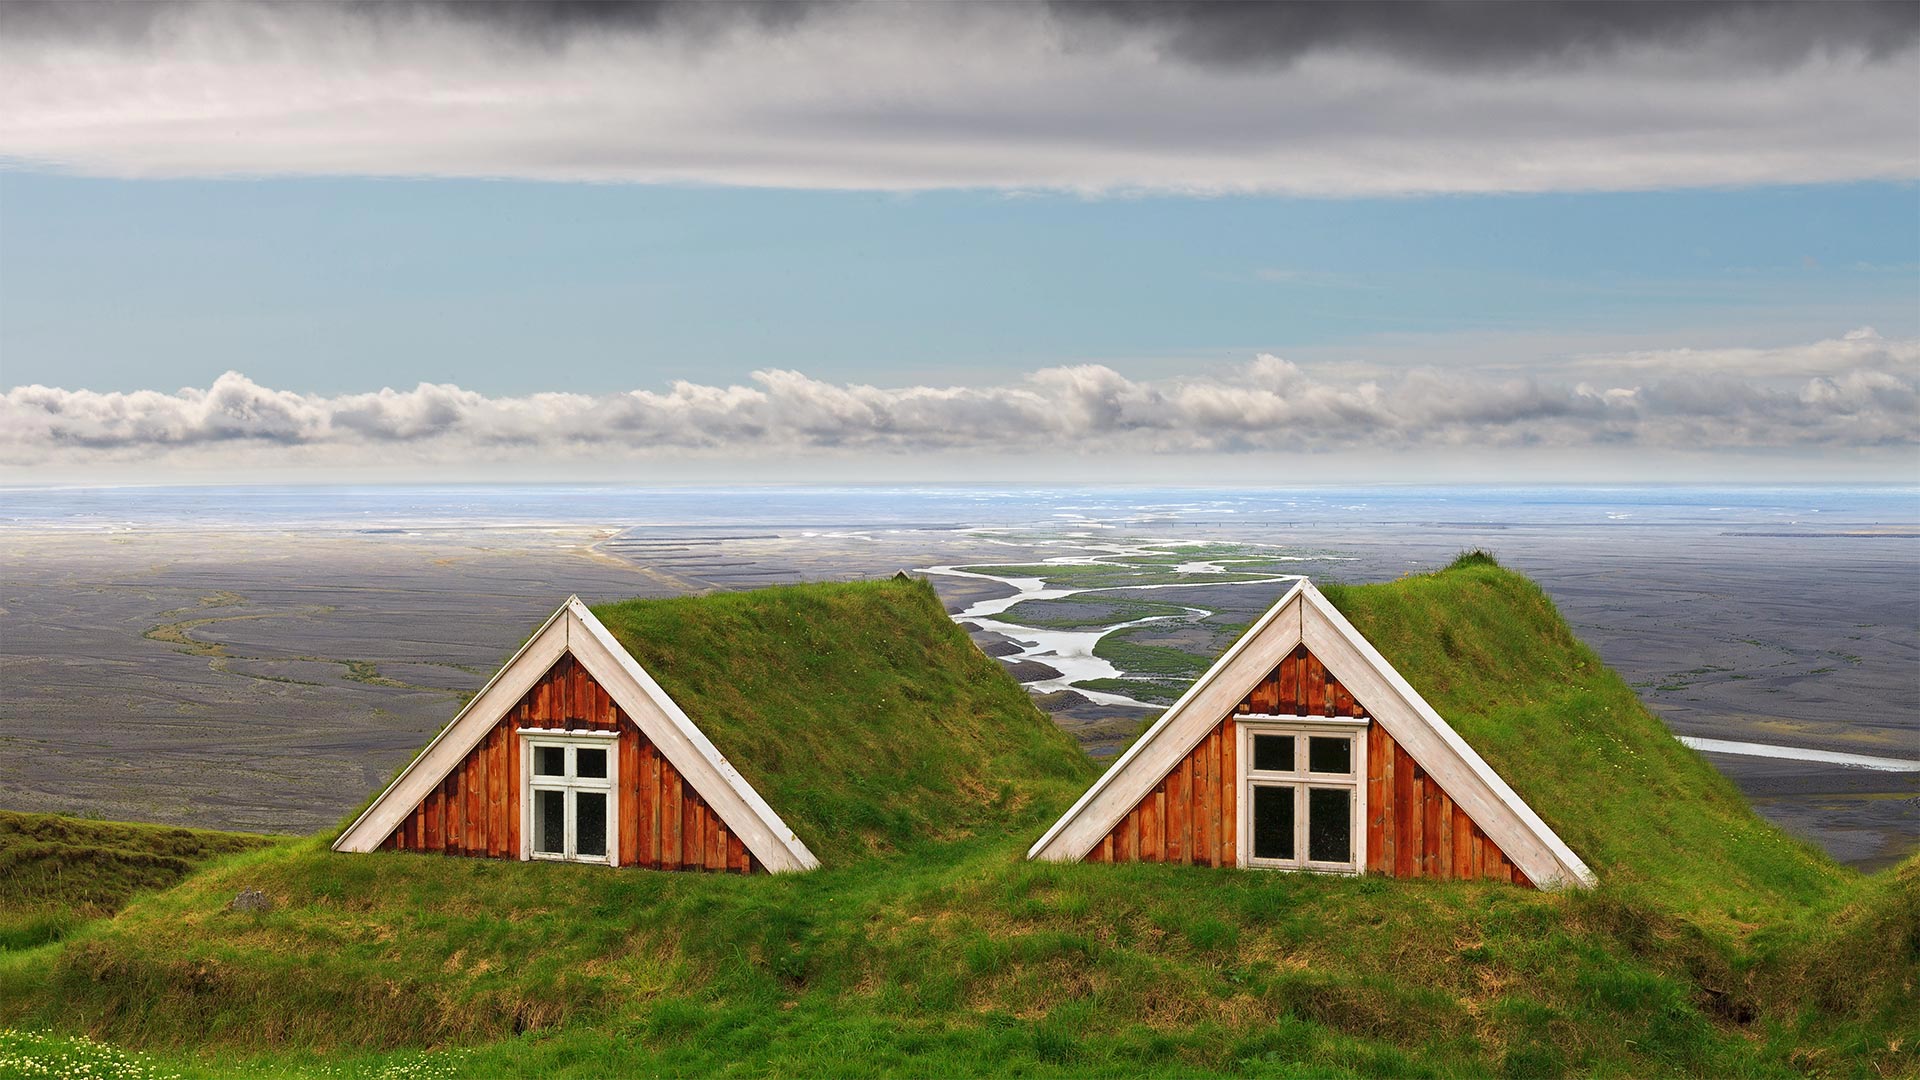 Turf farmhouses at Skaftafell, Vatnajökull National Park, Iceland - Jarcosa/Getty Images)